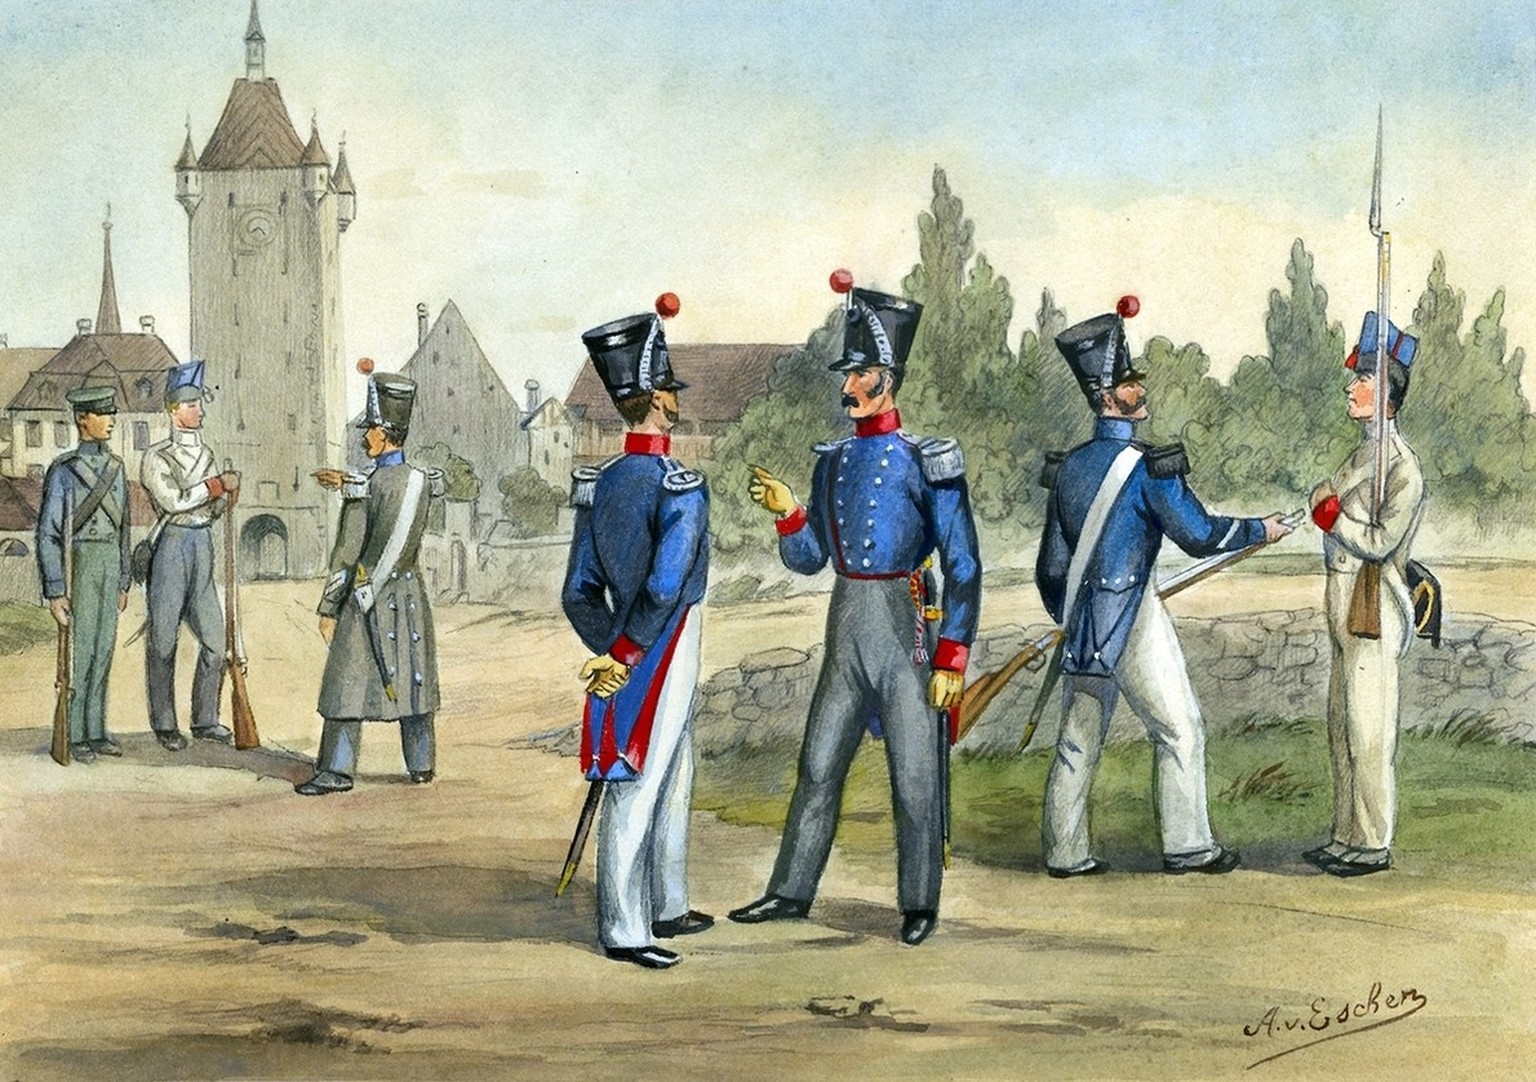 Instructeurs lors de la formation des recrues d’infanterie, vers 1830.
https://www.historic.admin.ch/media/image/9d65a977-5aef-4ae5-9fc1-c8372da547e0